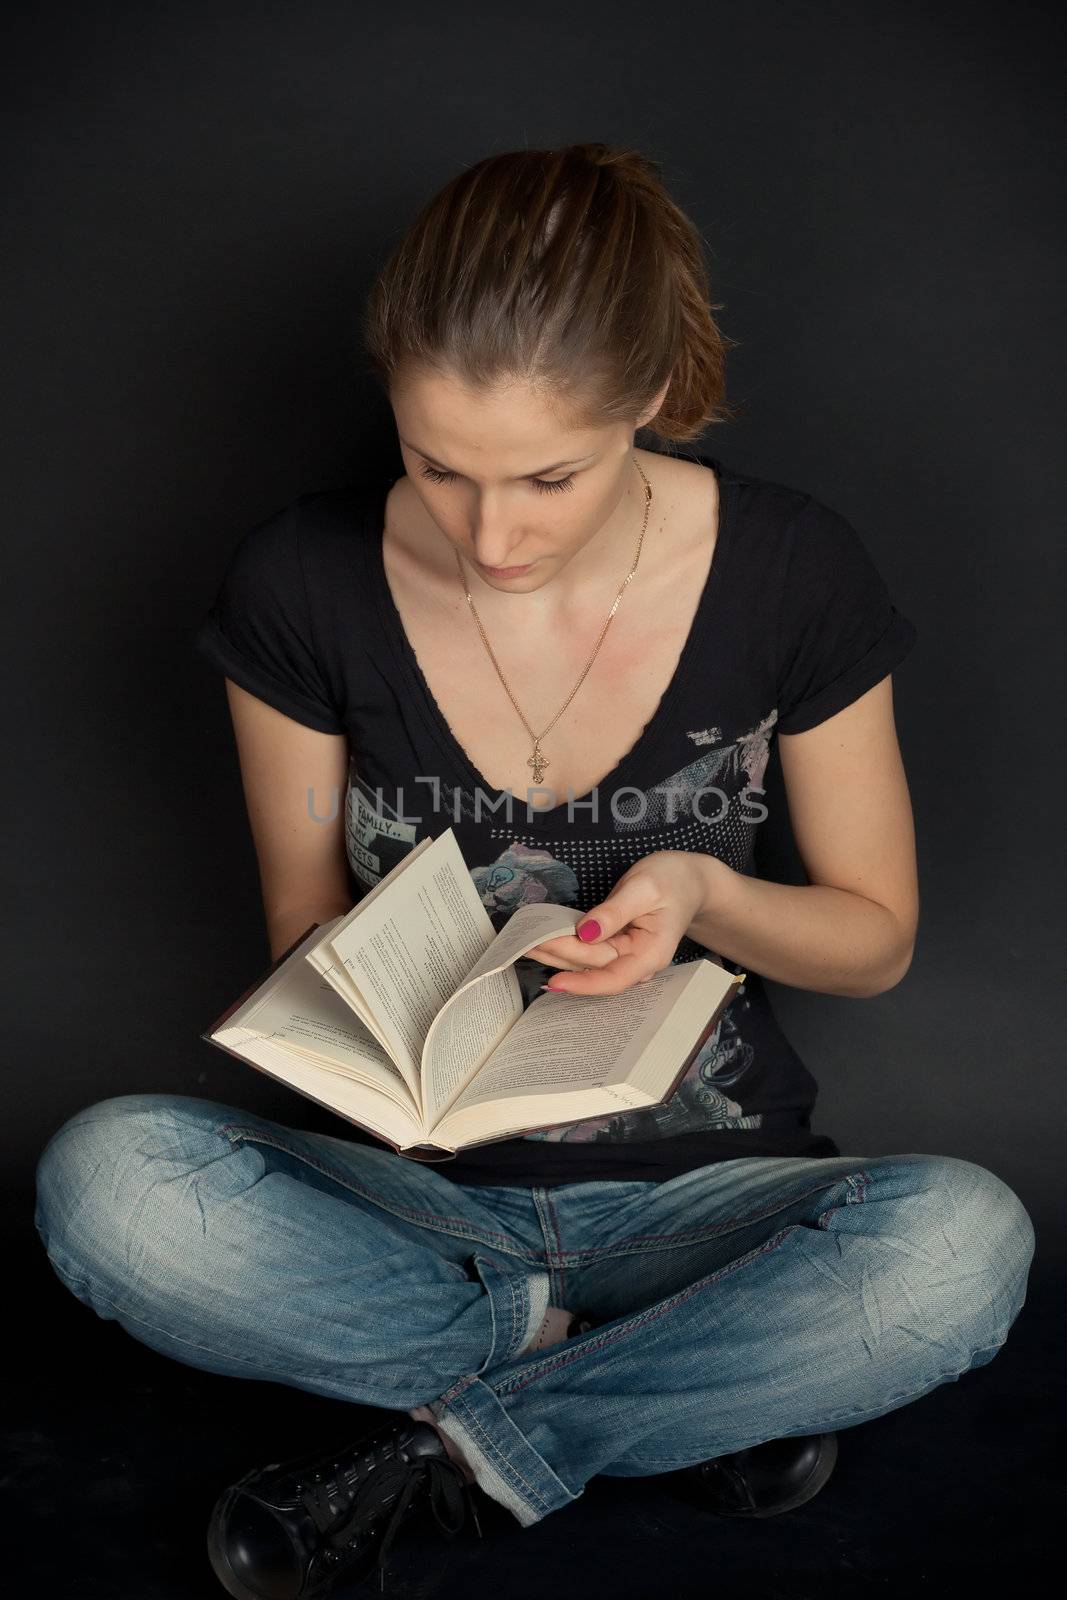 Girl leafs through a book by victosha